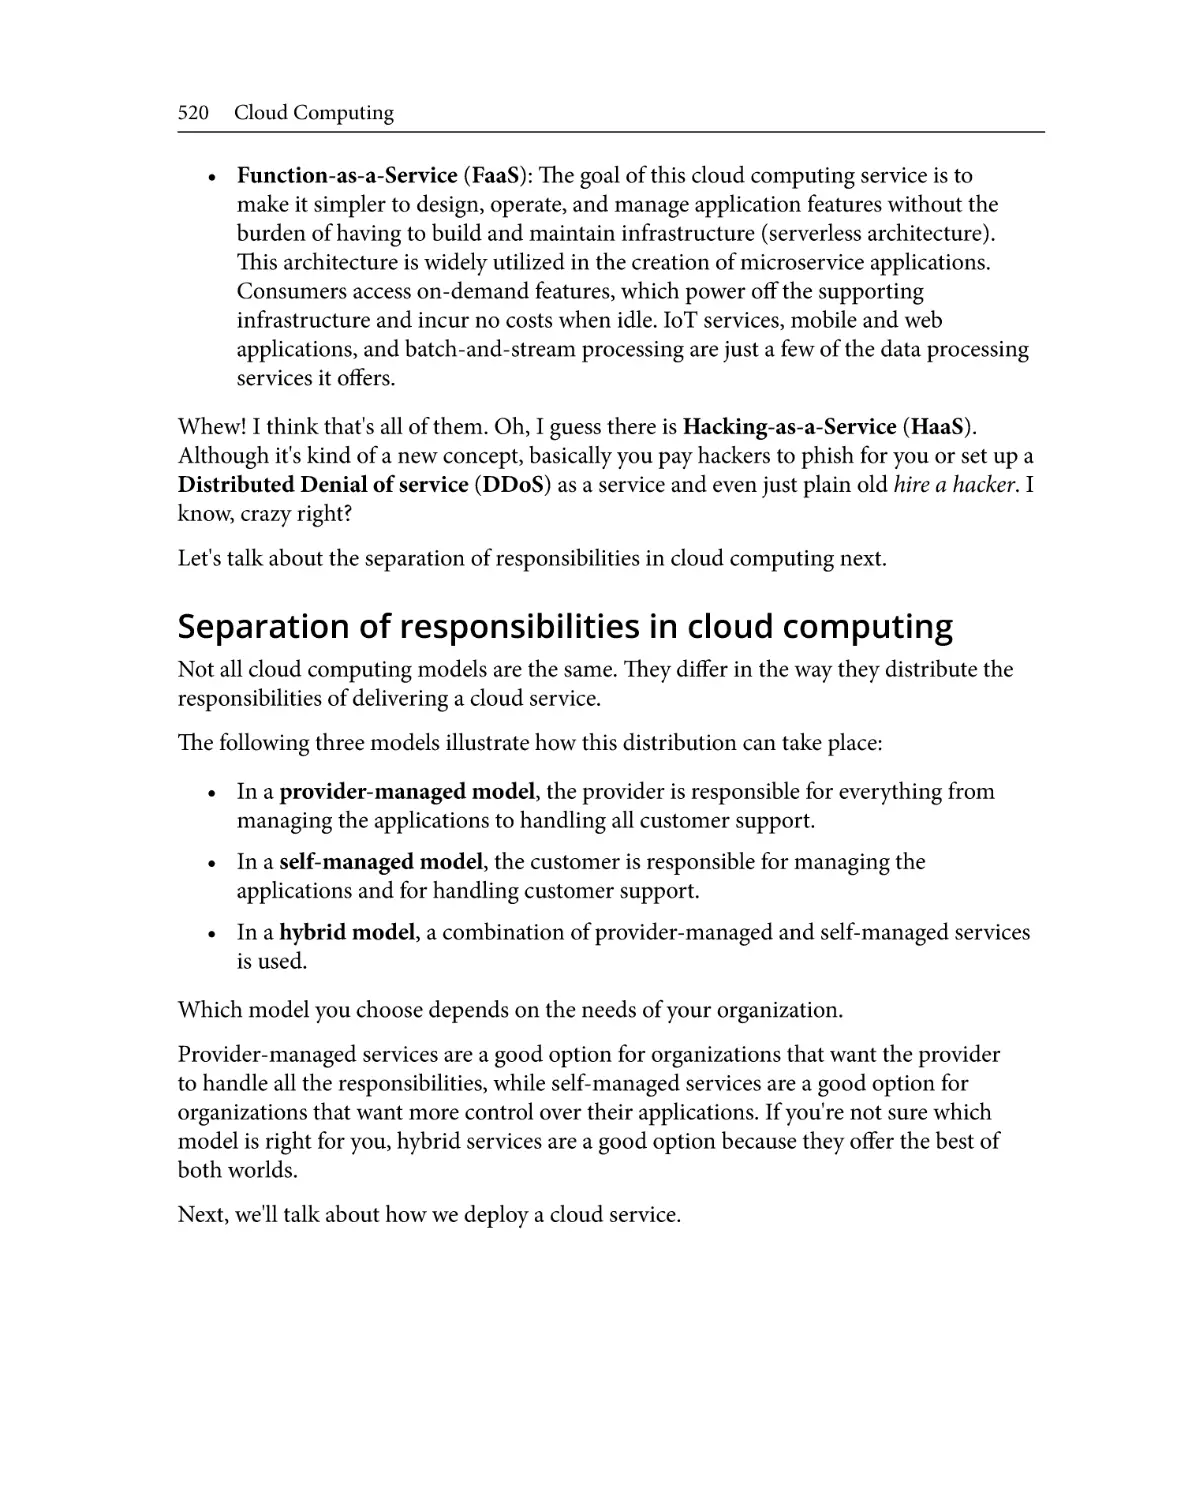 Separation of responsibilities in cloud computing